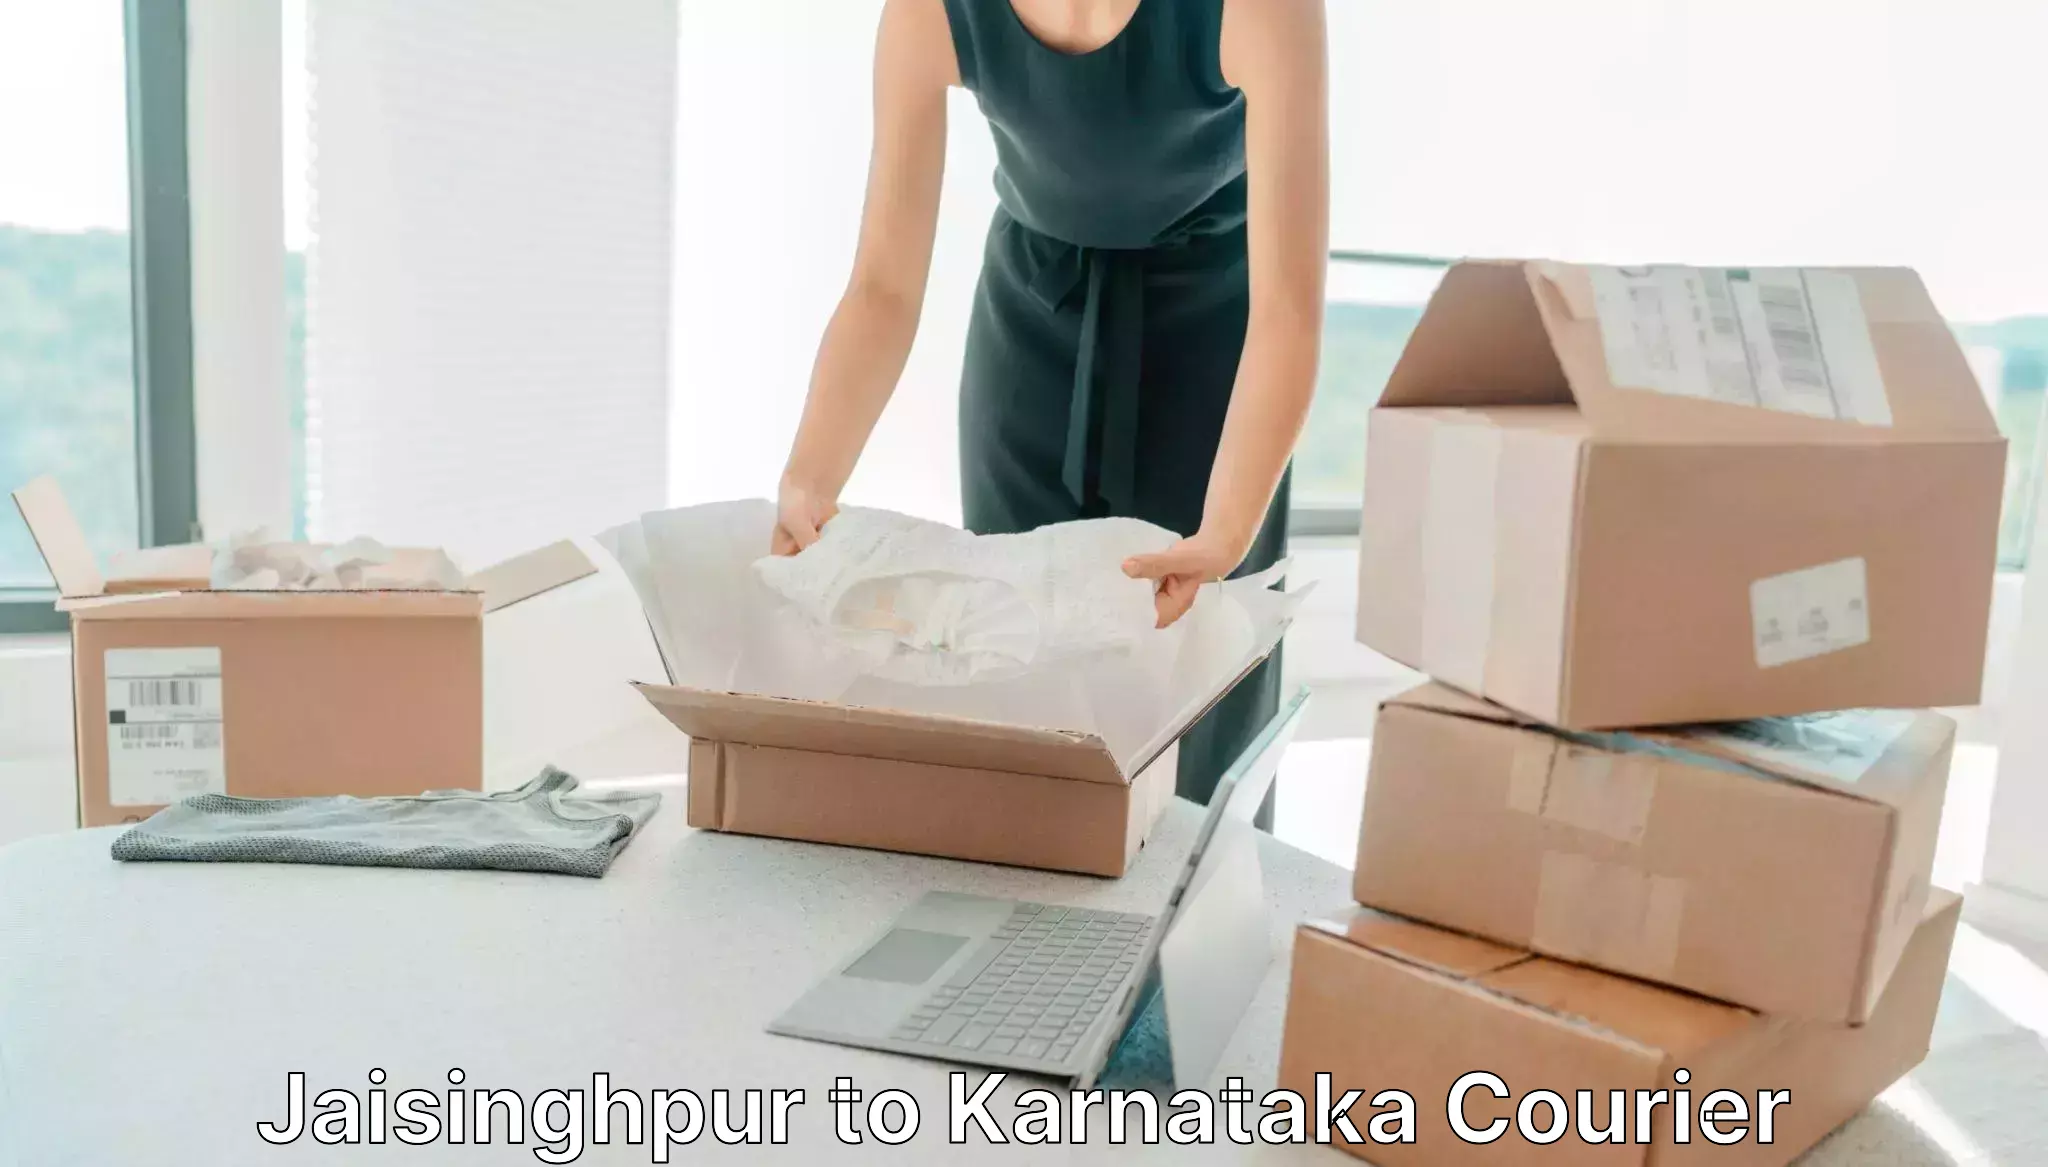 Express mail solutions in Jaisinghpur to Karnataka